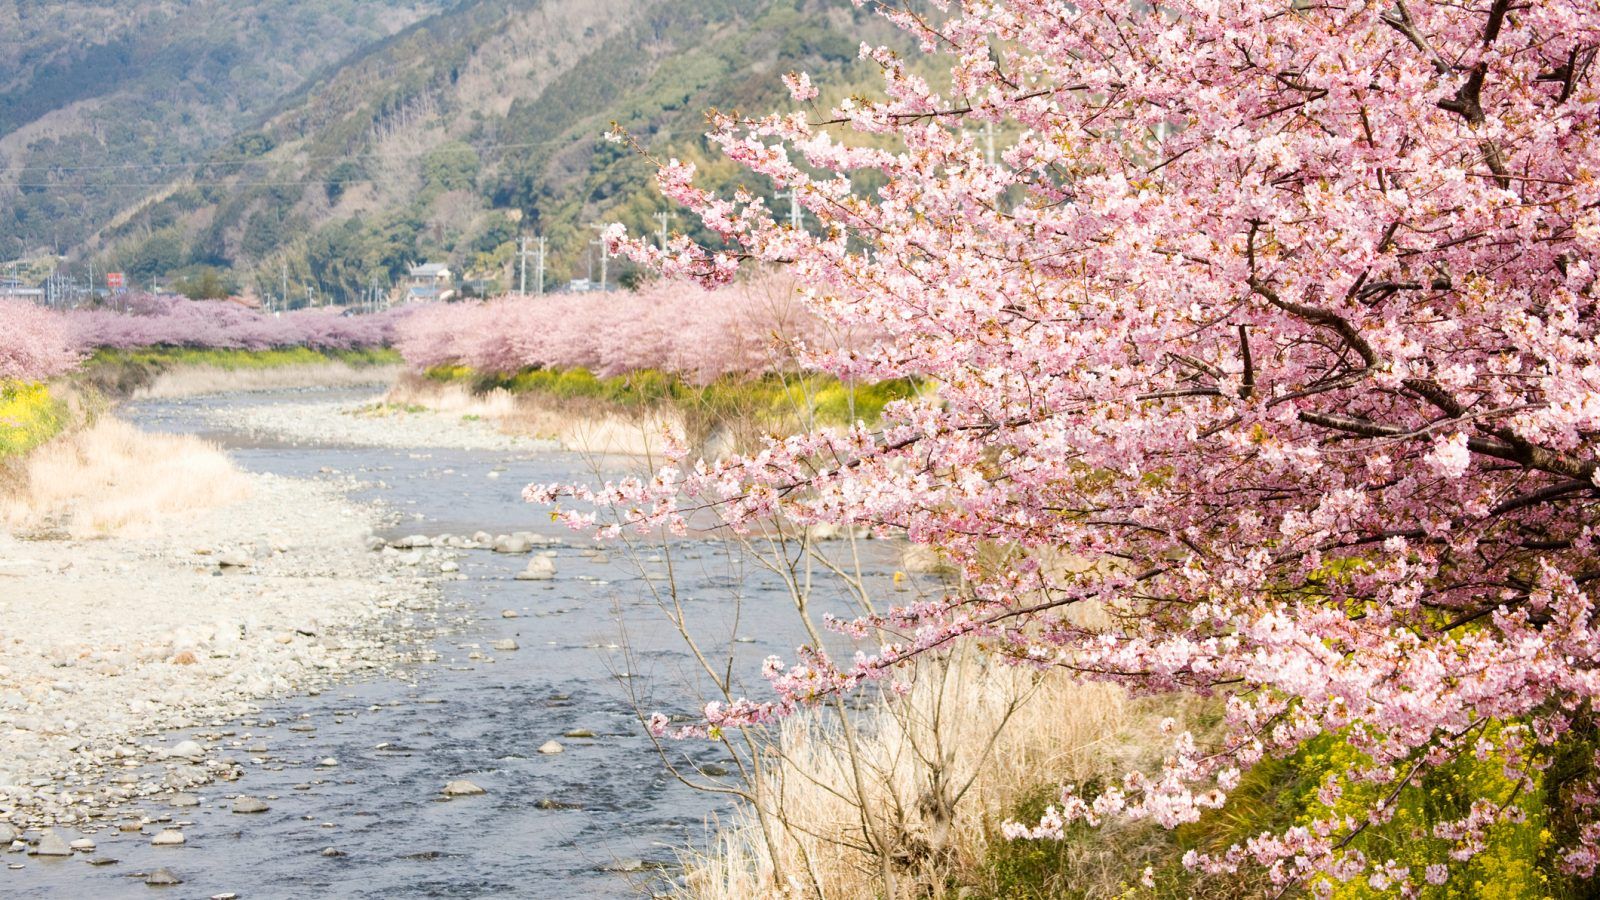 Kawazu Cherry Blossom Festival earliest cherry blossoms in East Japan